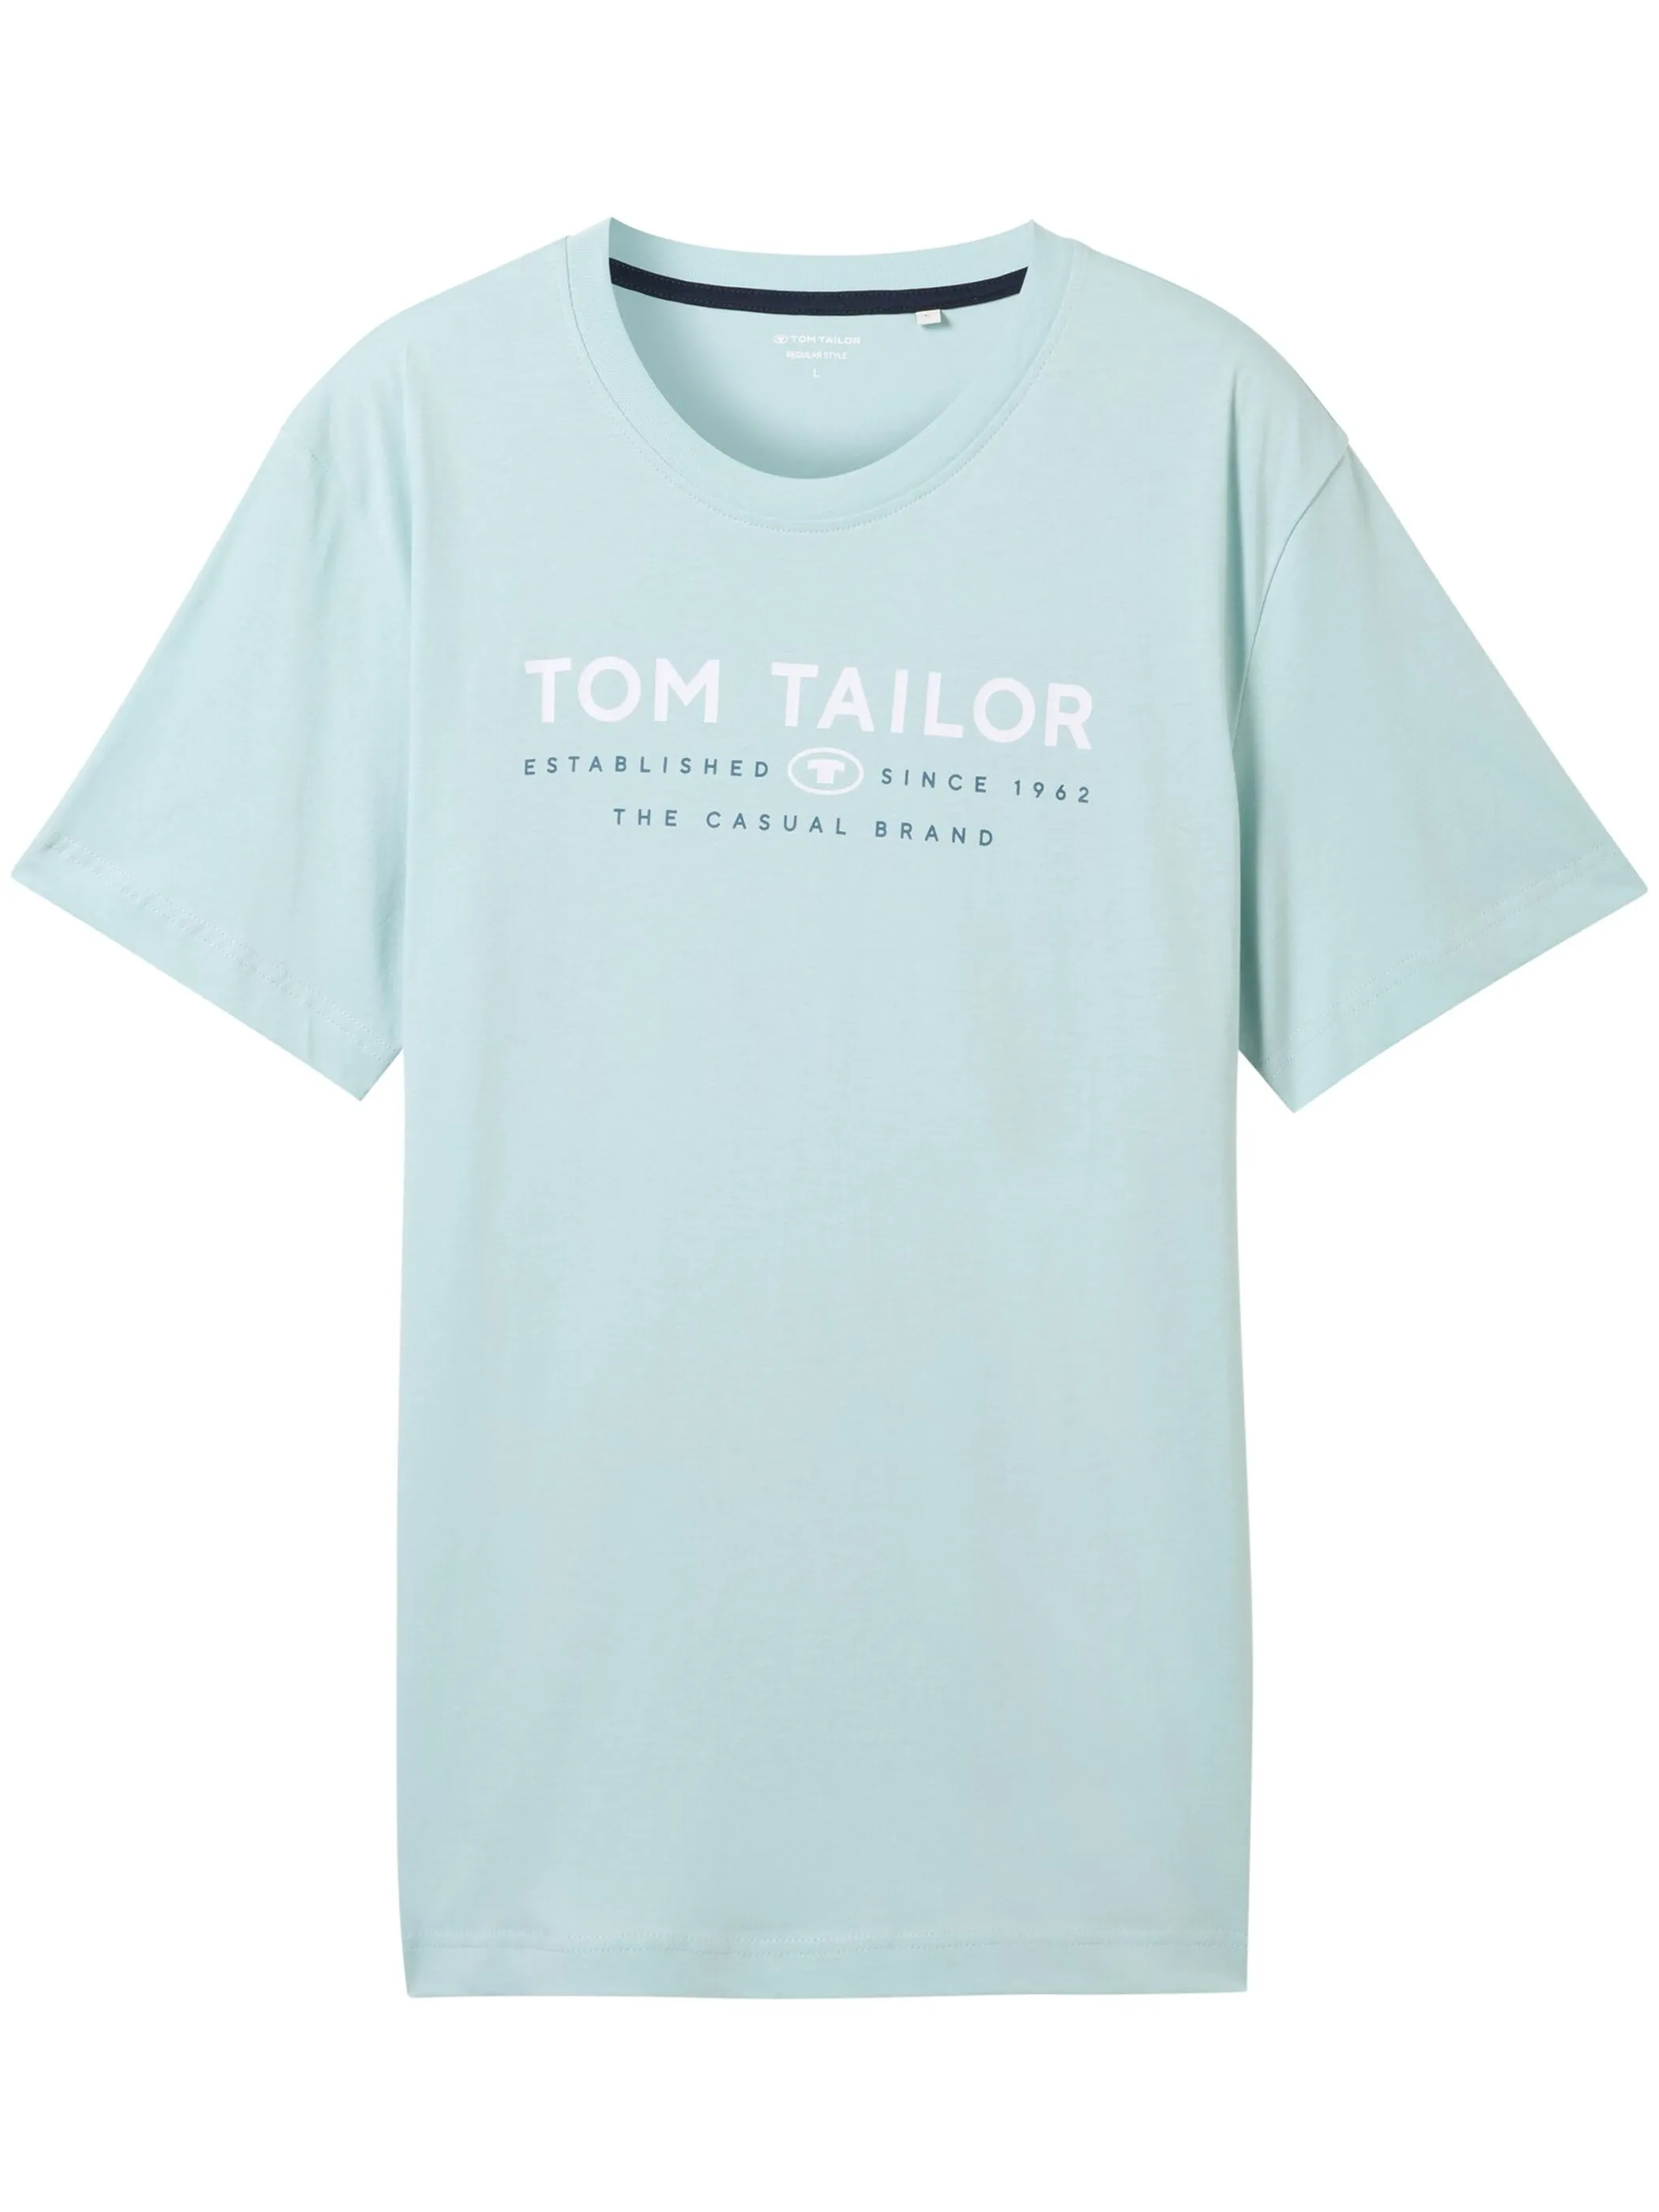 Tom Tailor 1043276 t-shirt with print Türkis 898849 30463 1